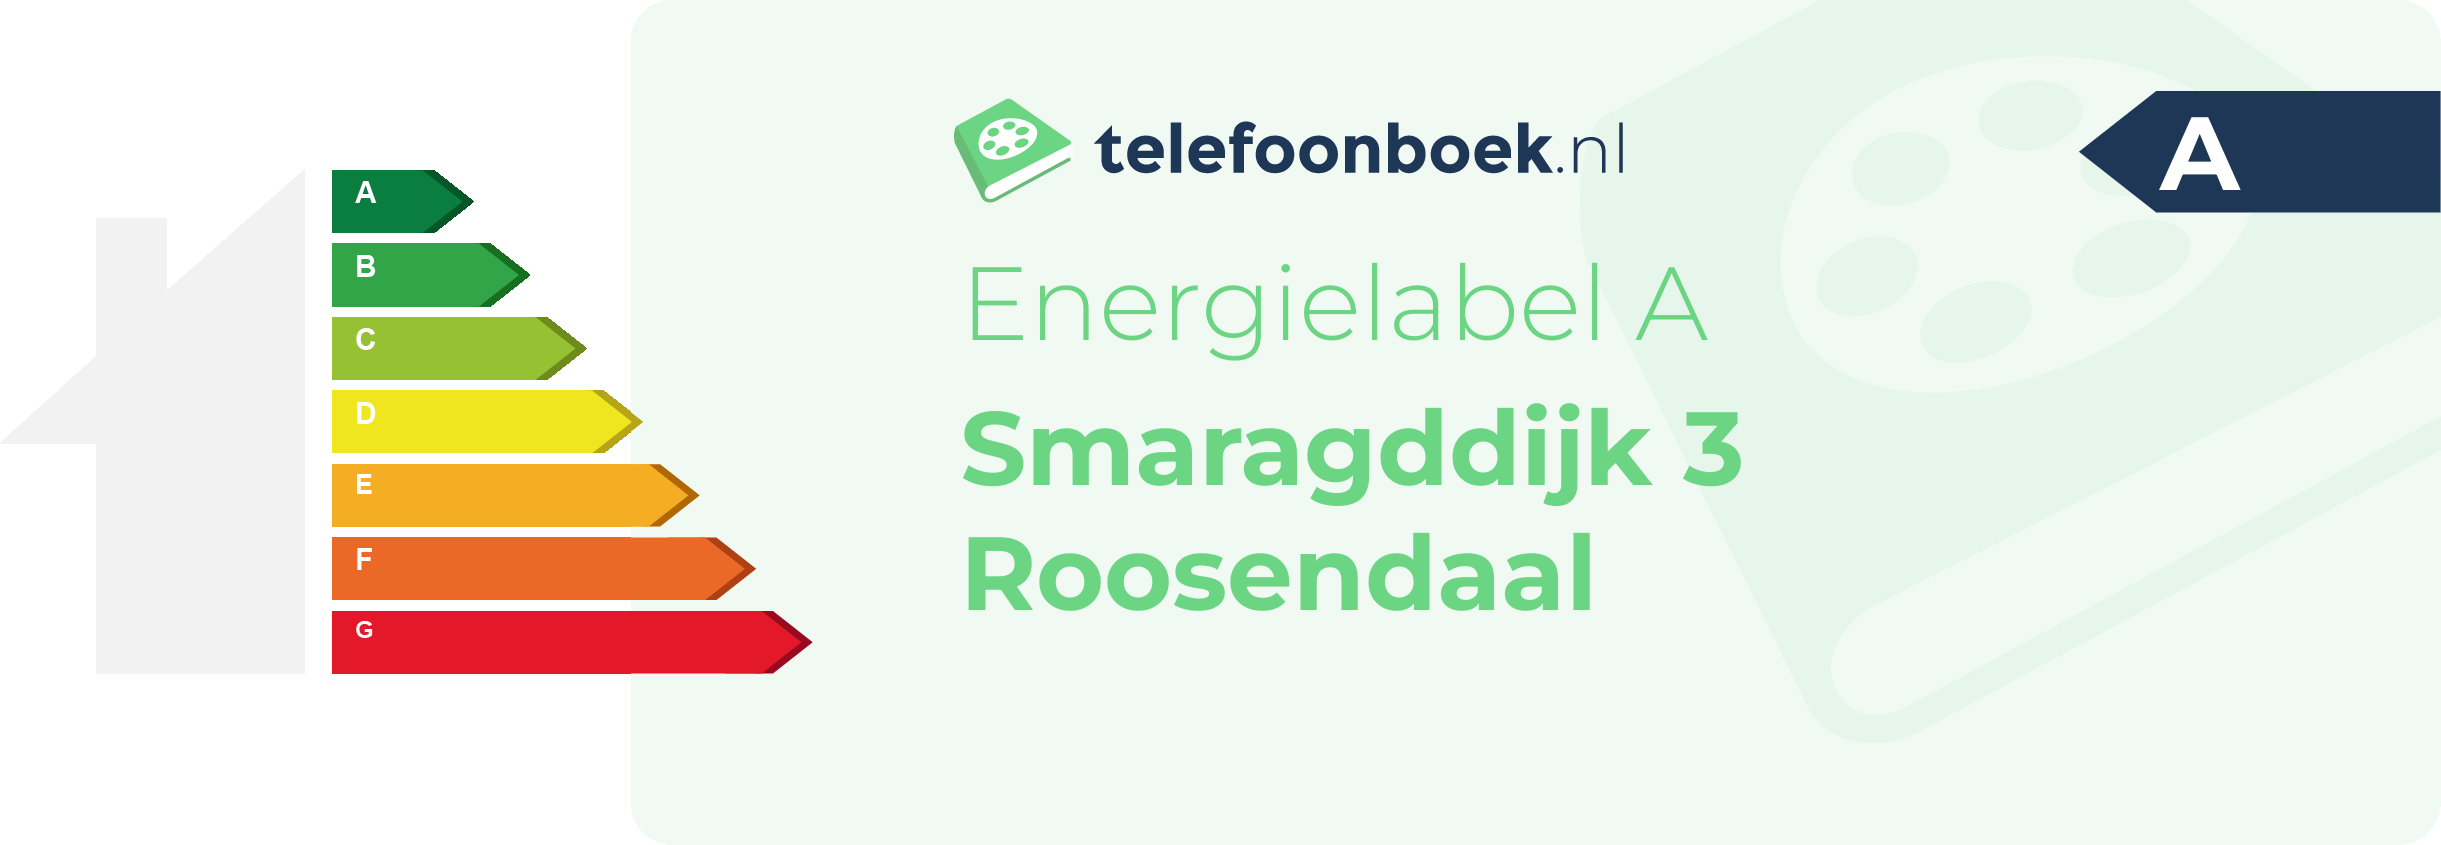 Energielabel Smaragddijk 3 Roosendaal